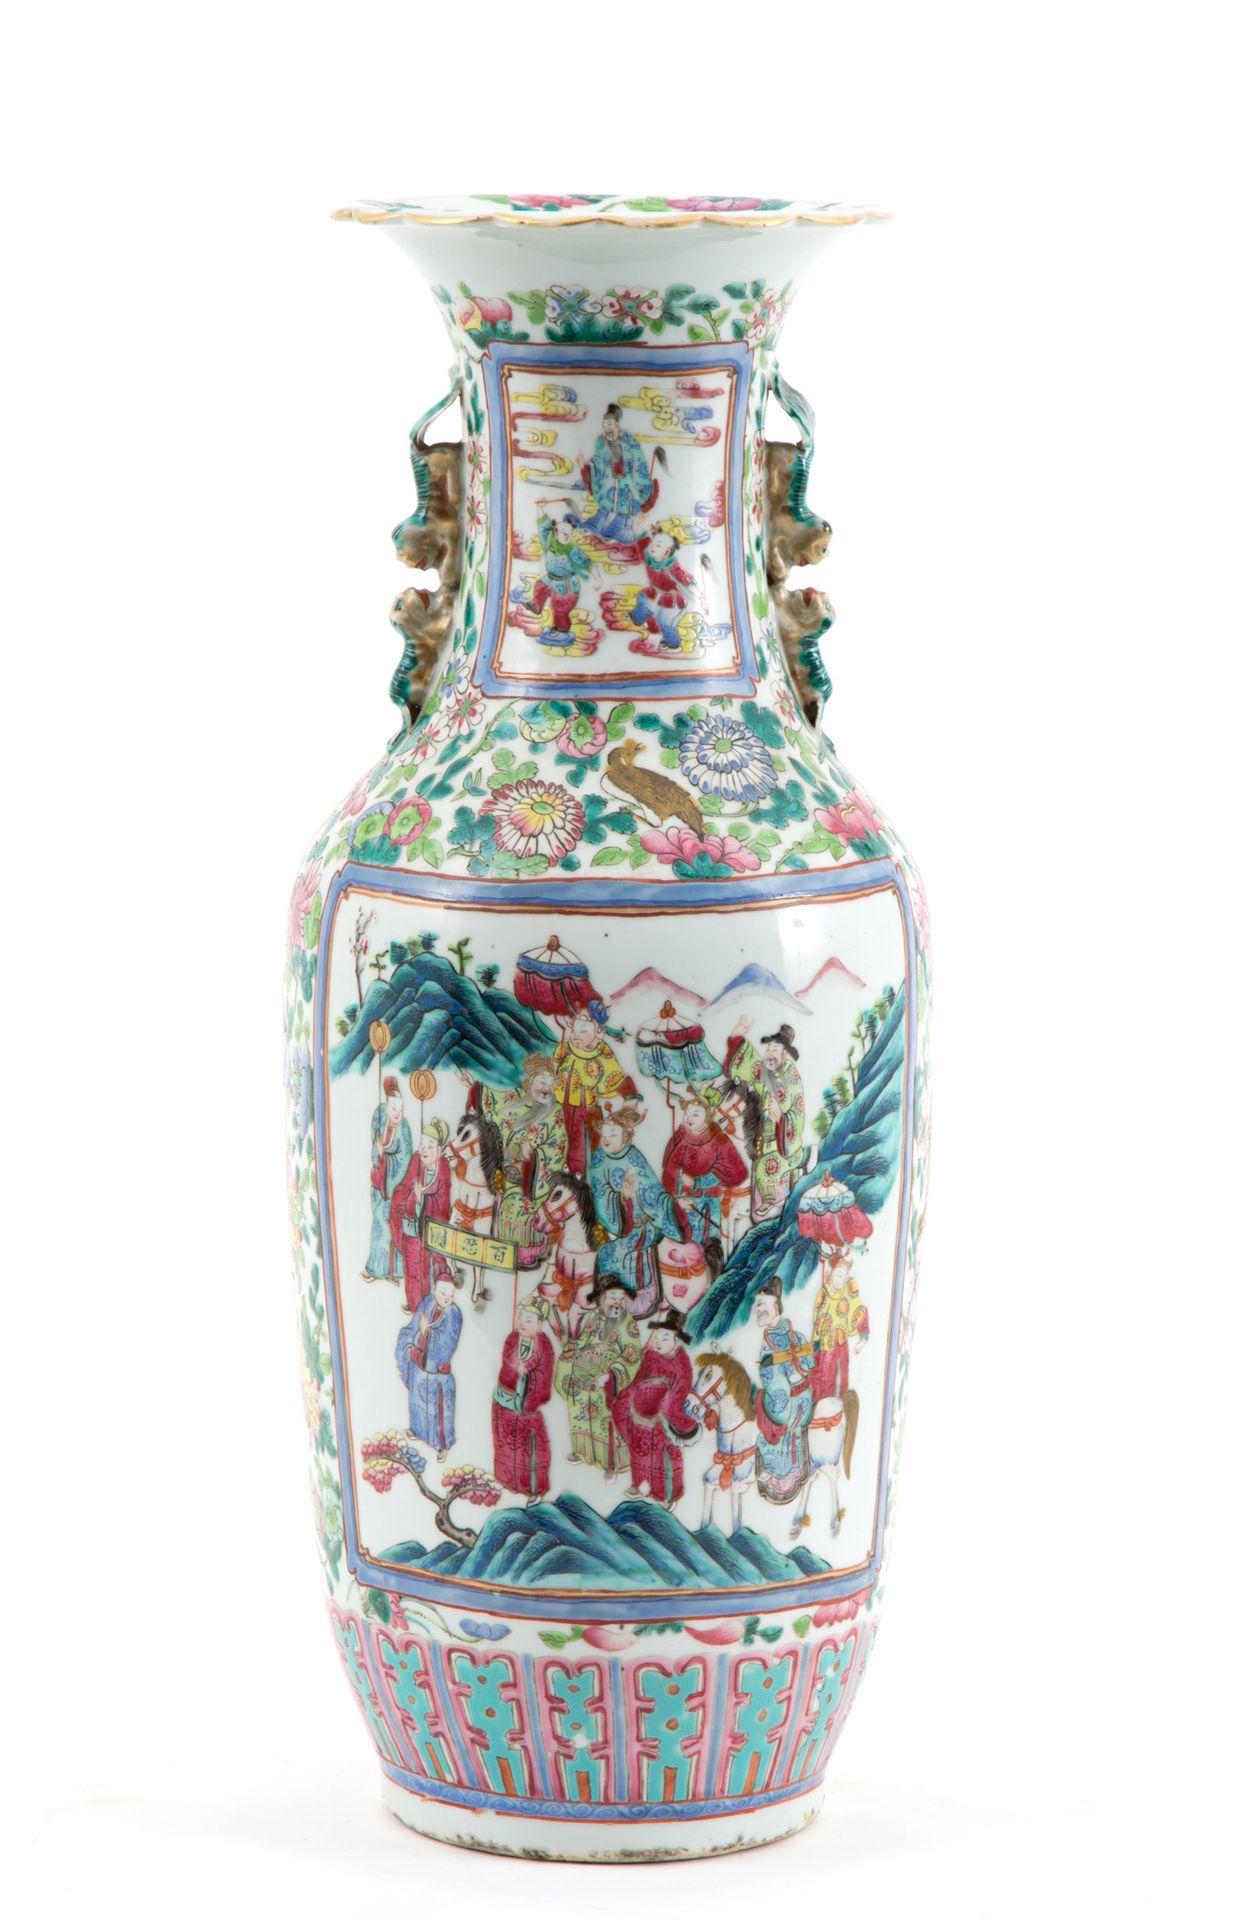 Pink Family porcelain vase 玫瑰家族的瓷器花瓶内描绘着 "生活场景"。中国。62x25厘米左右。